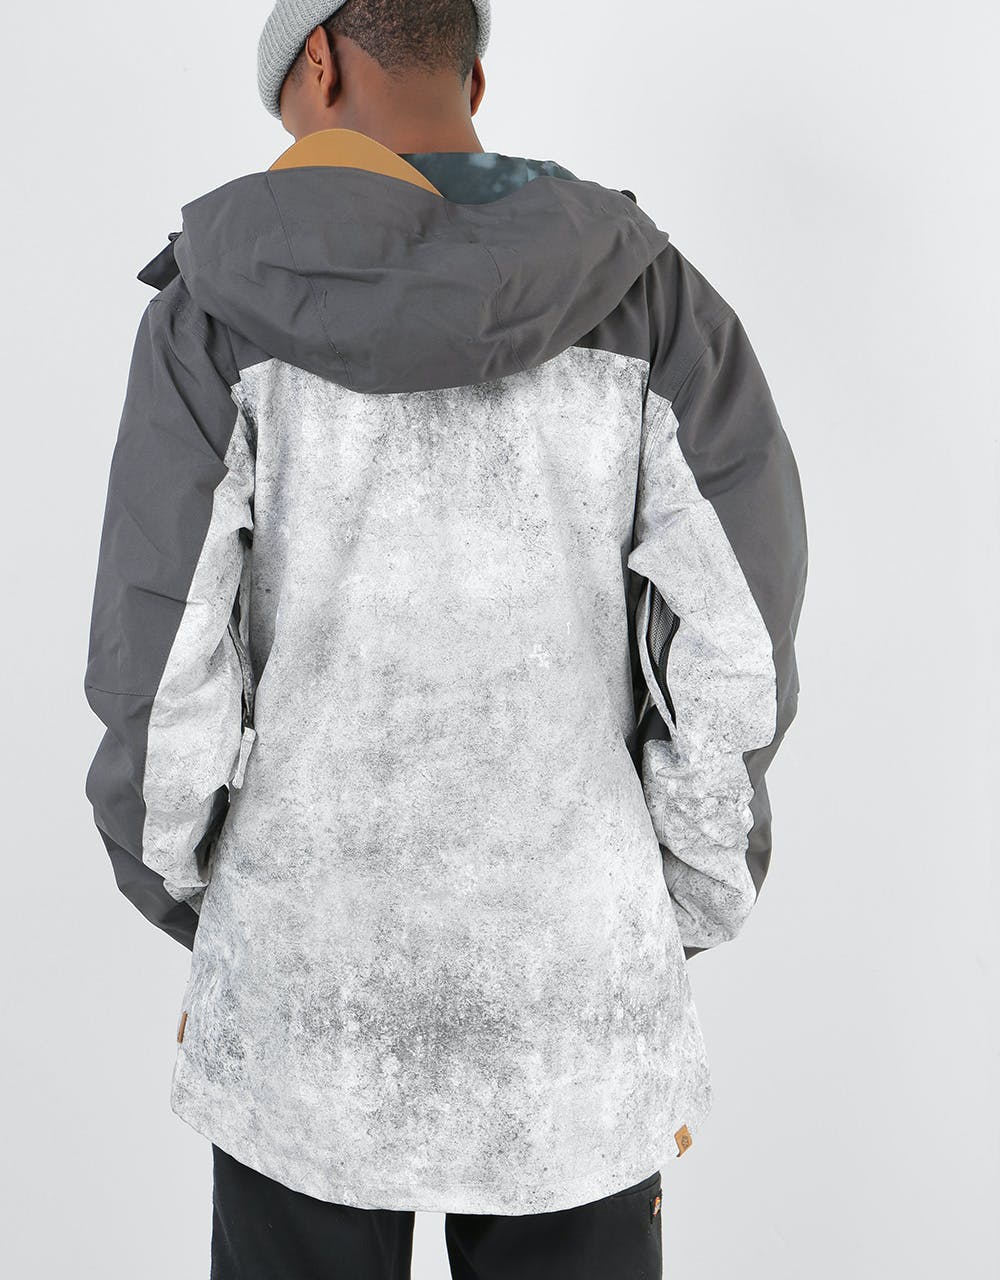 Sessions Ransack Shell Snowboard Jacket - Dark Grey/Concrete